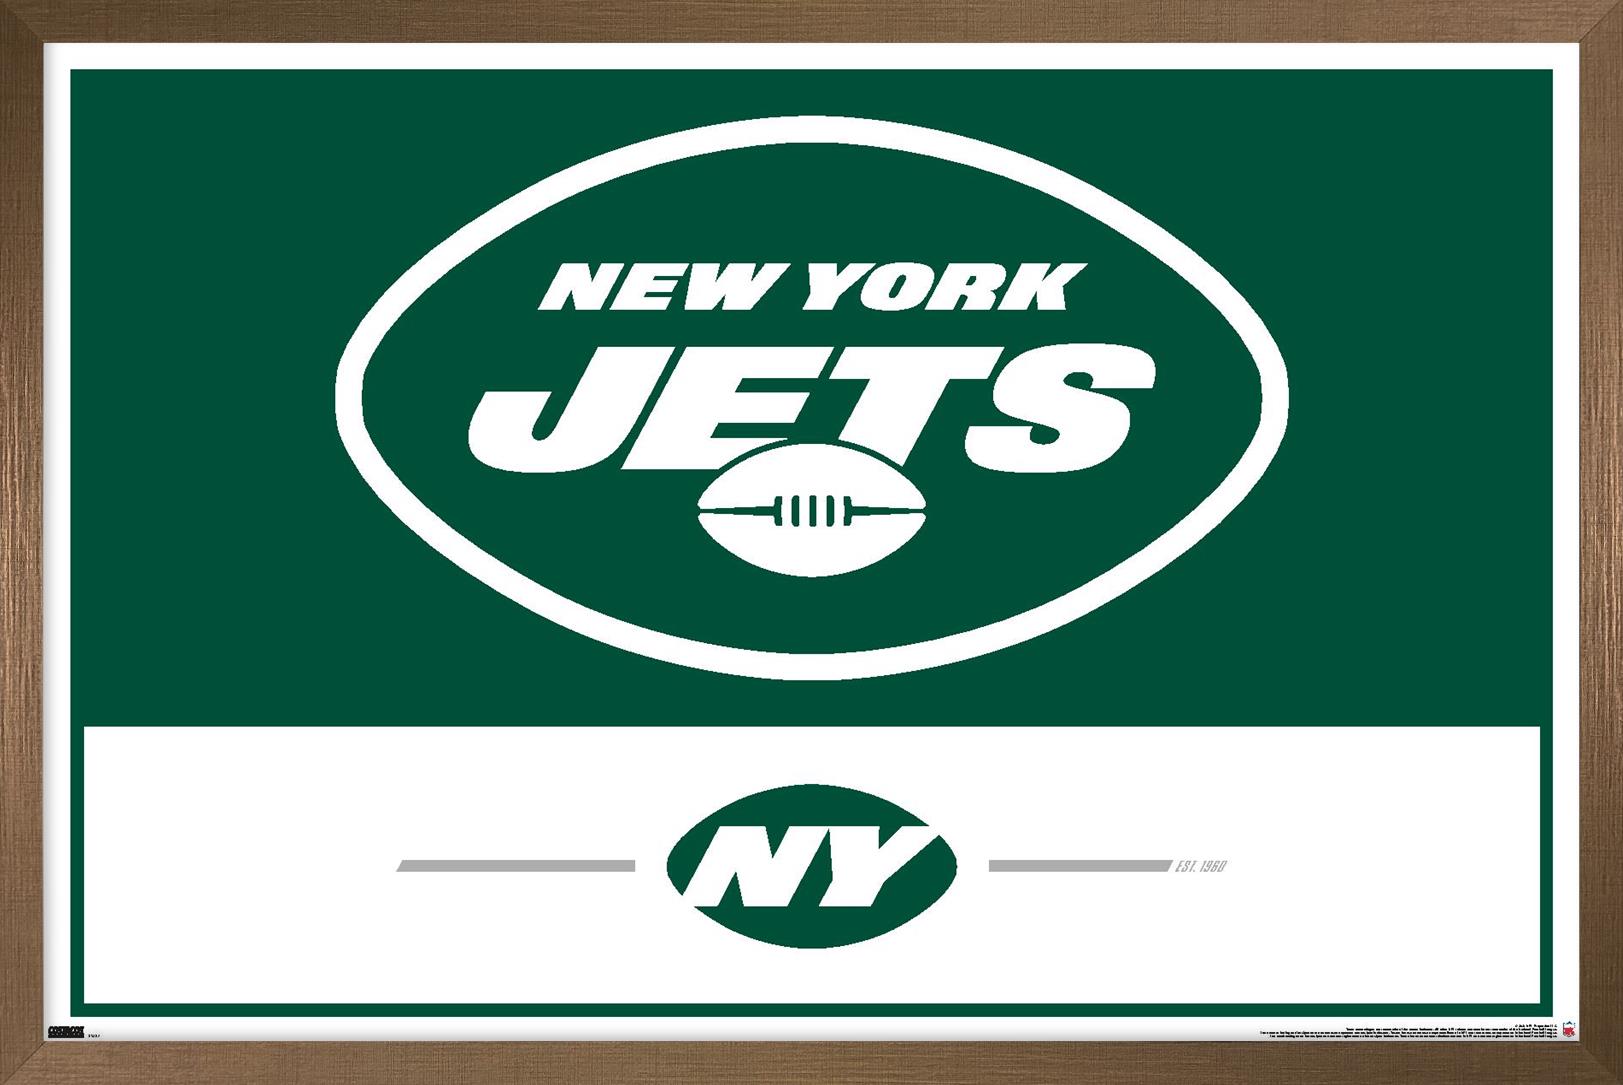 NFL New York Jets - Logo 21 Wall Poster, 22.375" x 34", Framed - image 1 of 3